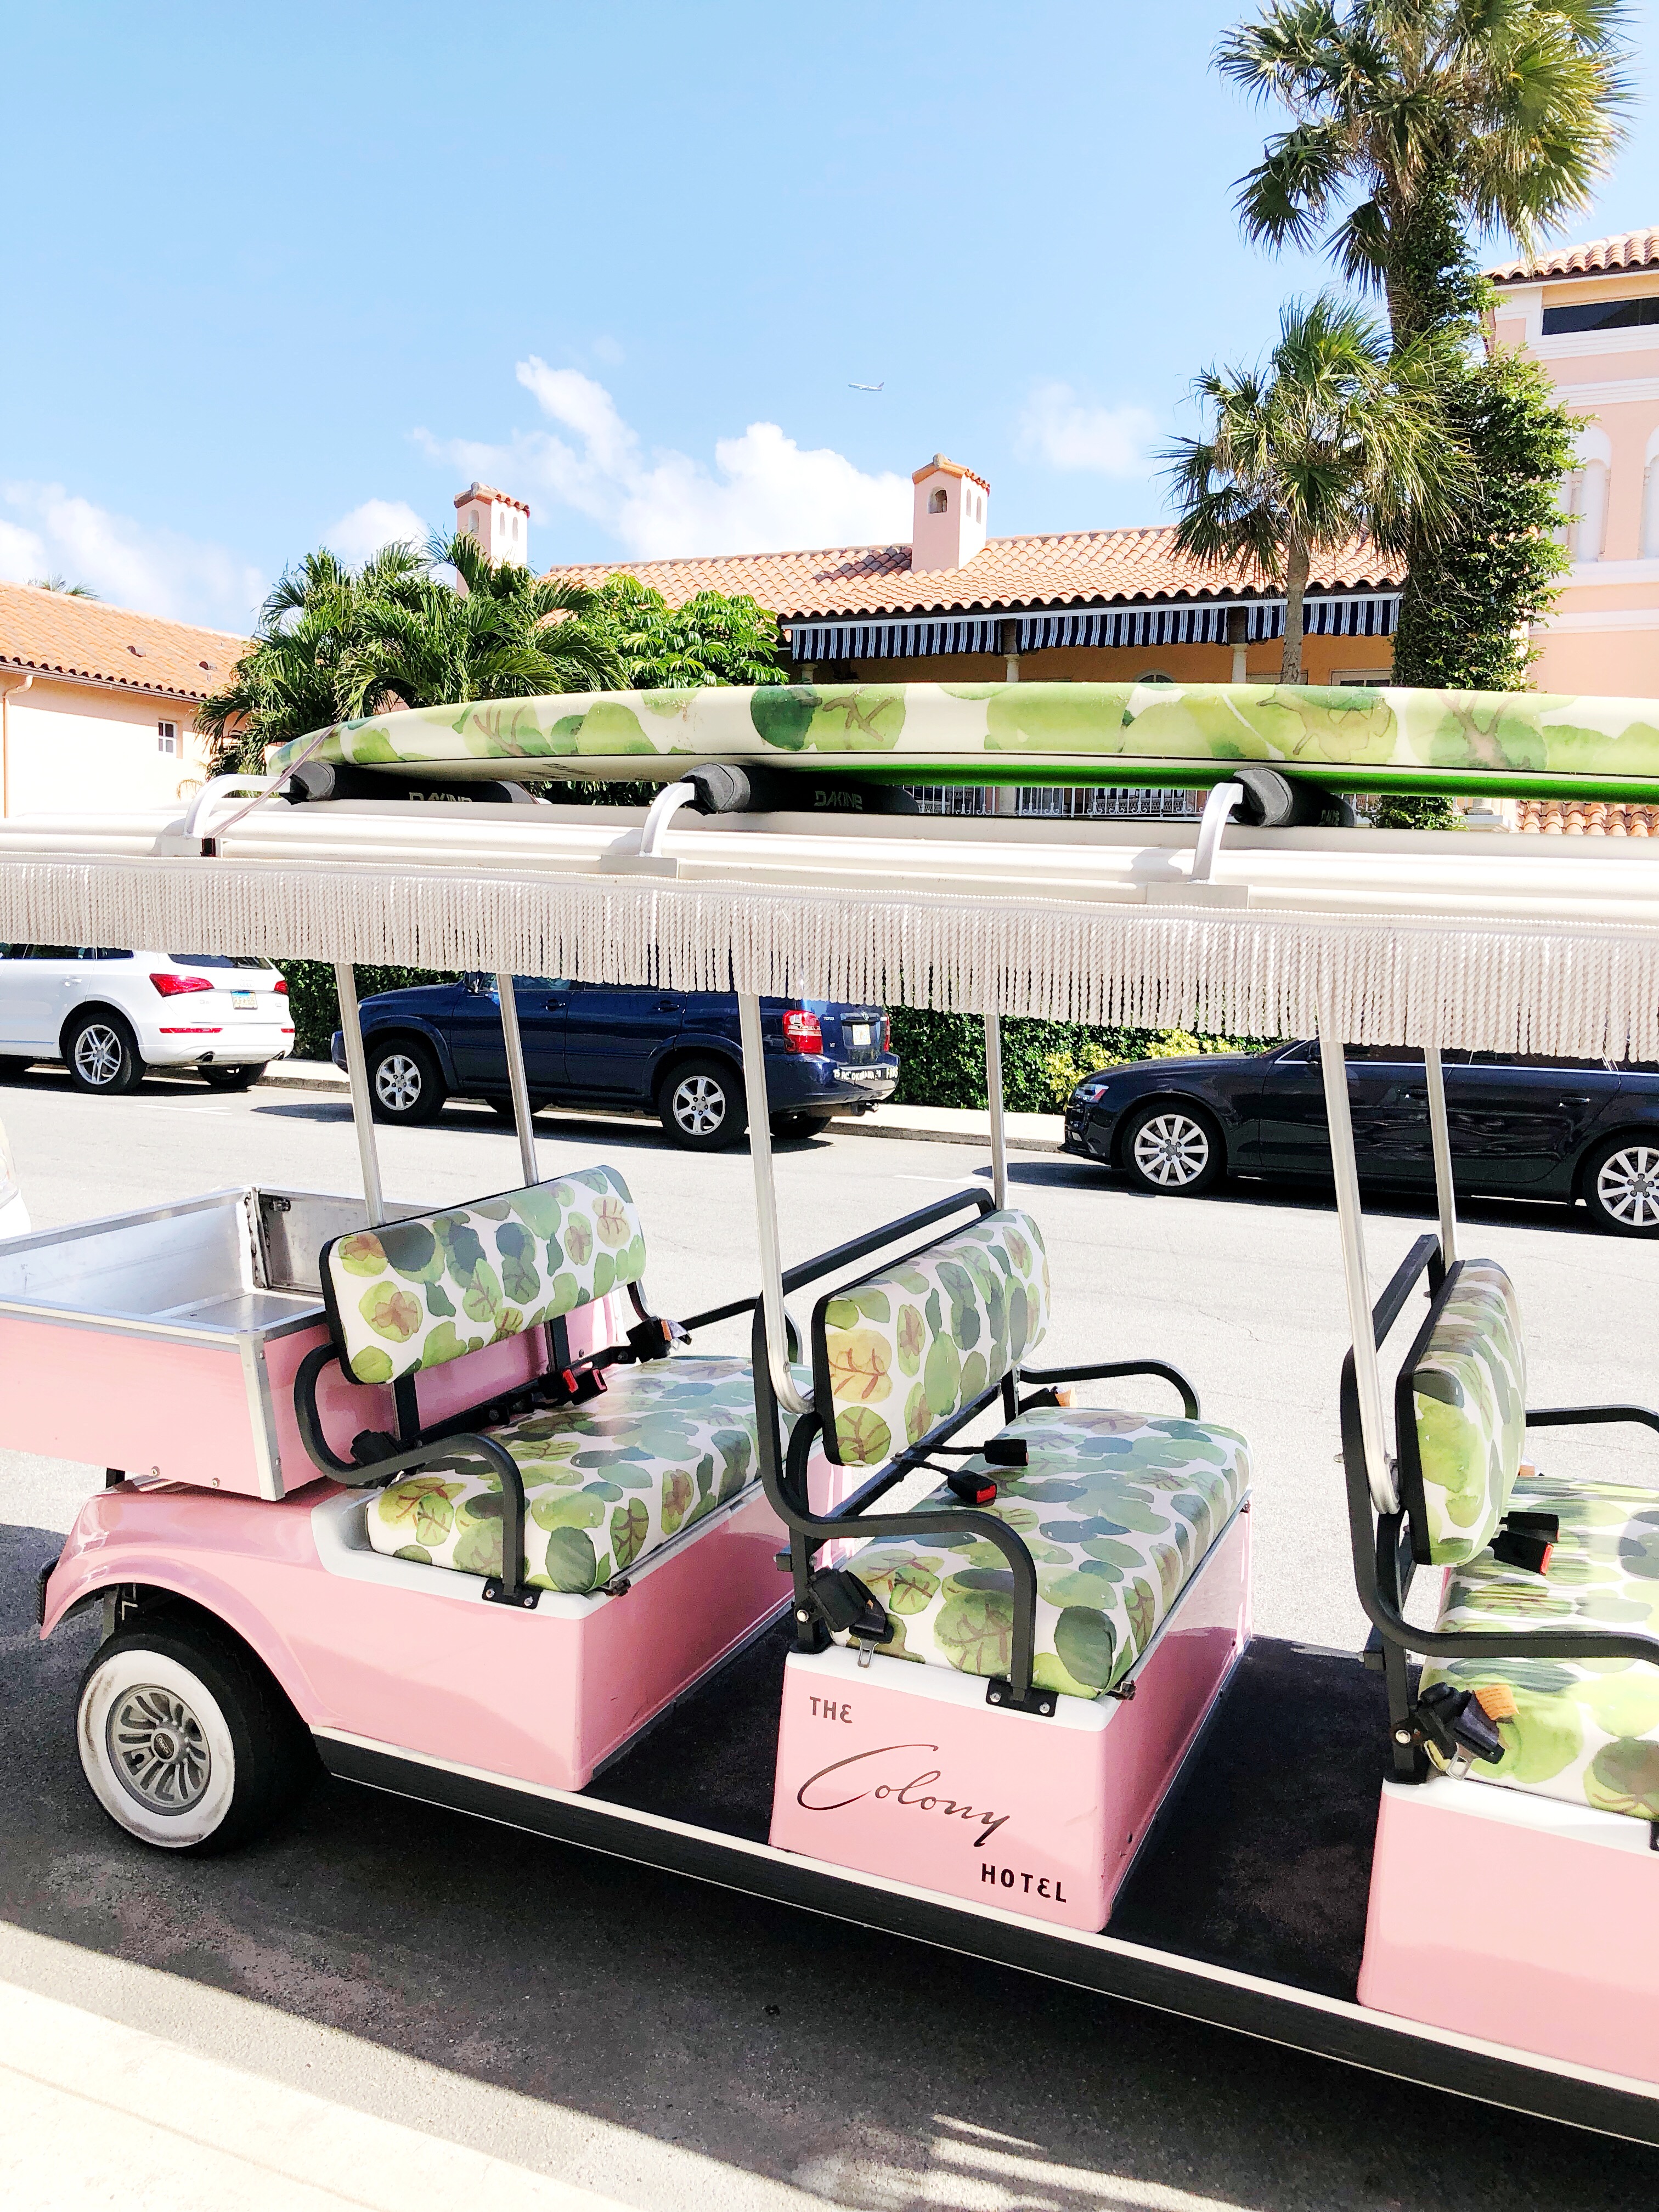 The Colony Hotel Golf Cart Palm Beach, Florida / West Palm Beach, Florida / Coastal and Beach Town - Sunshine Style